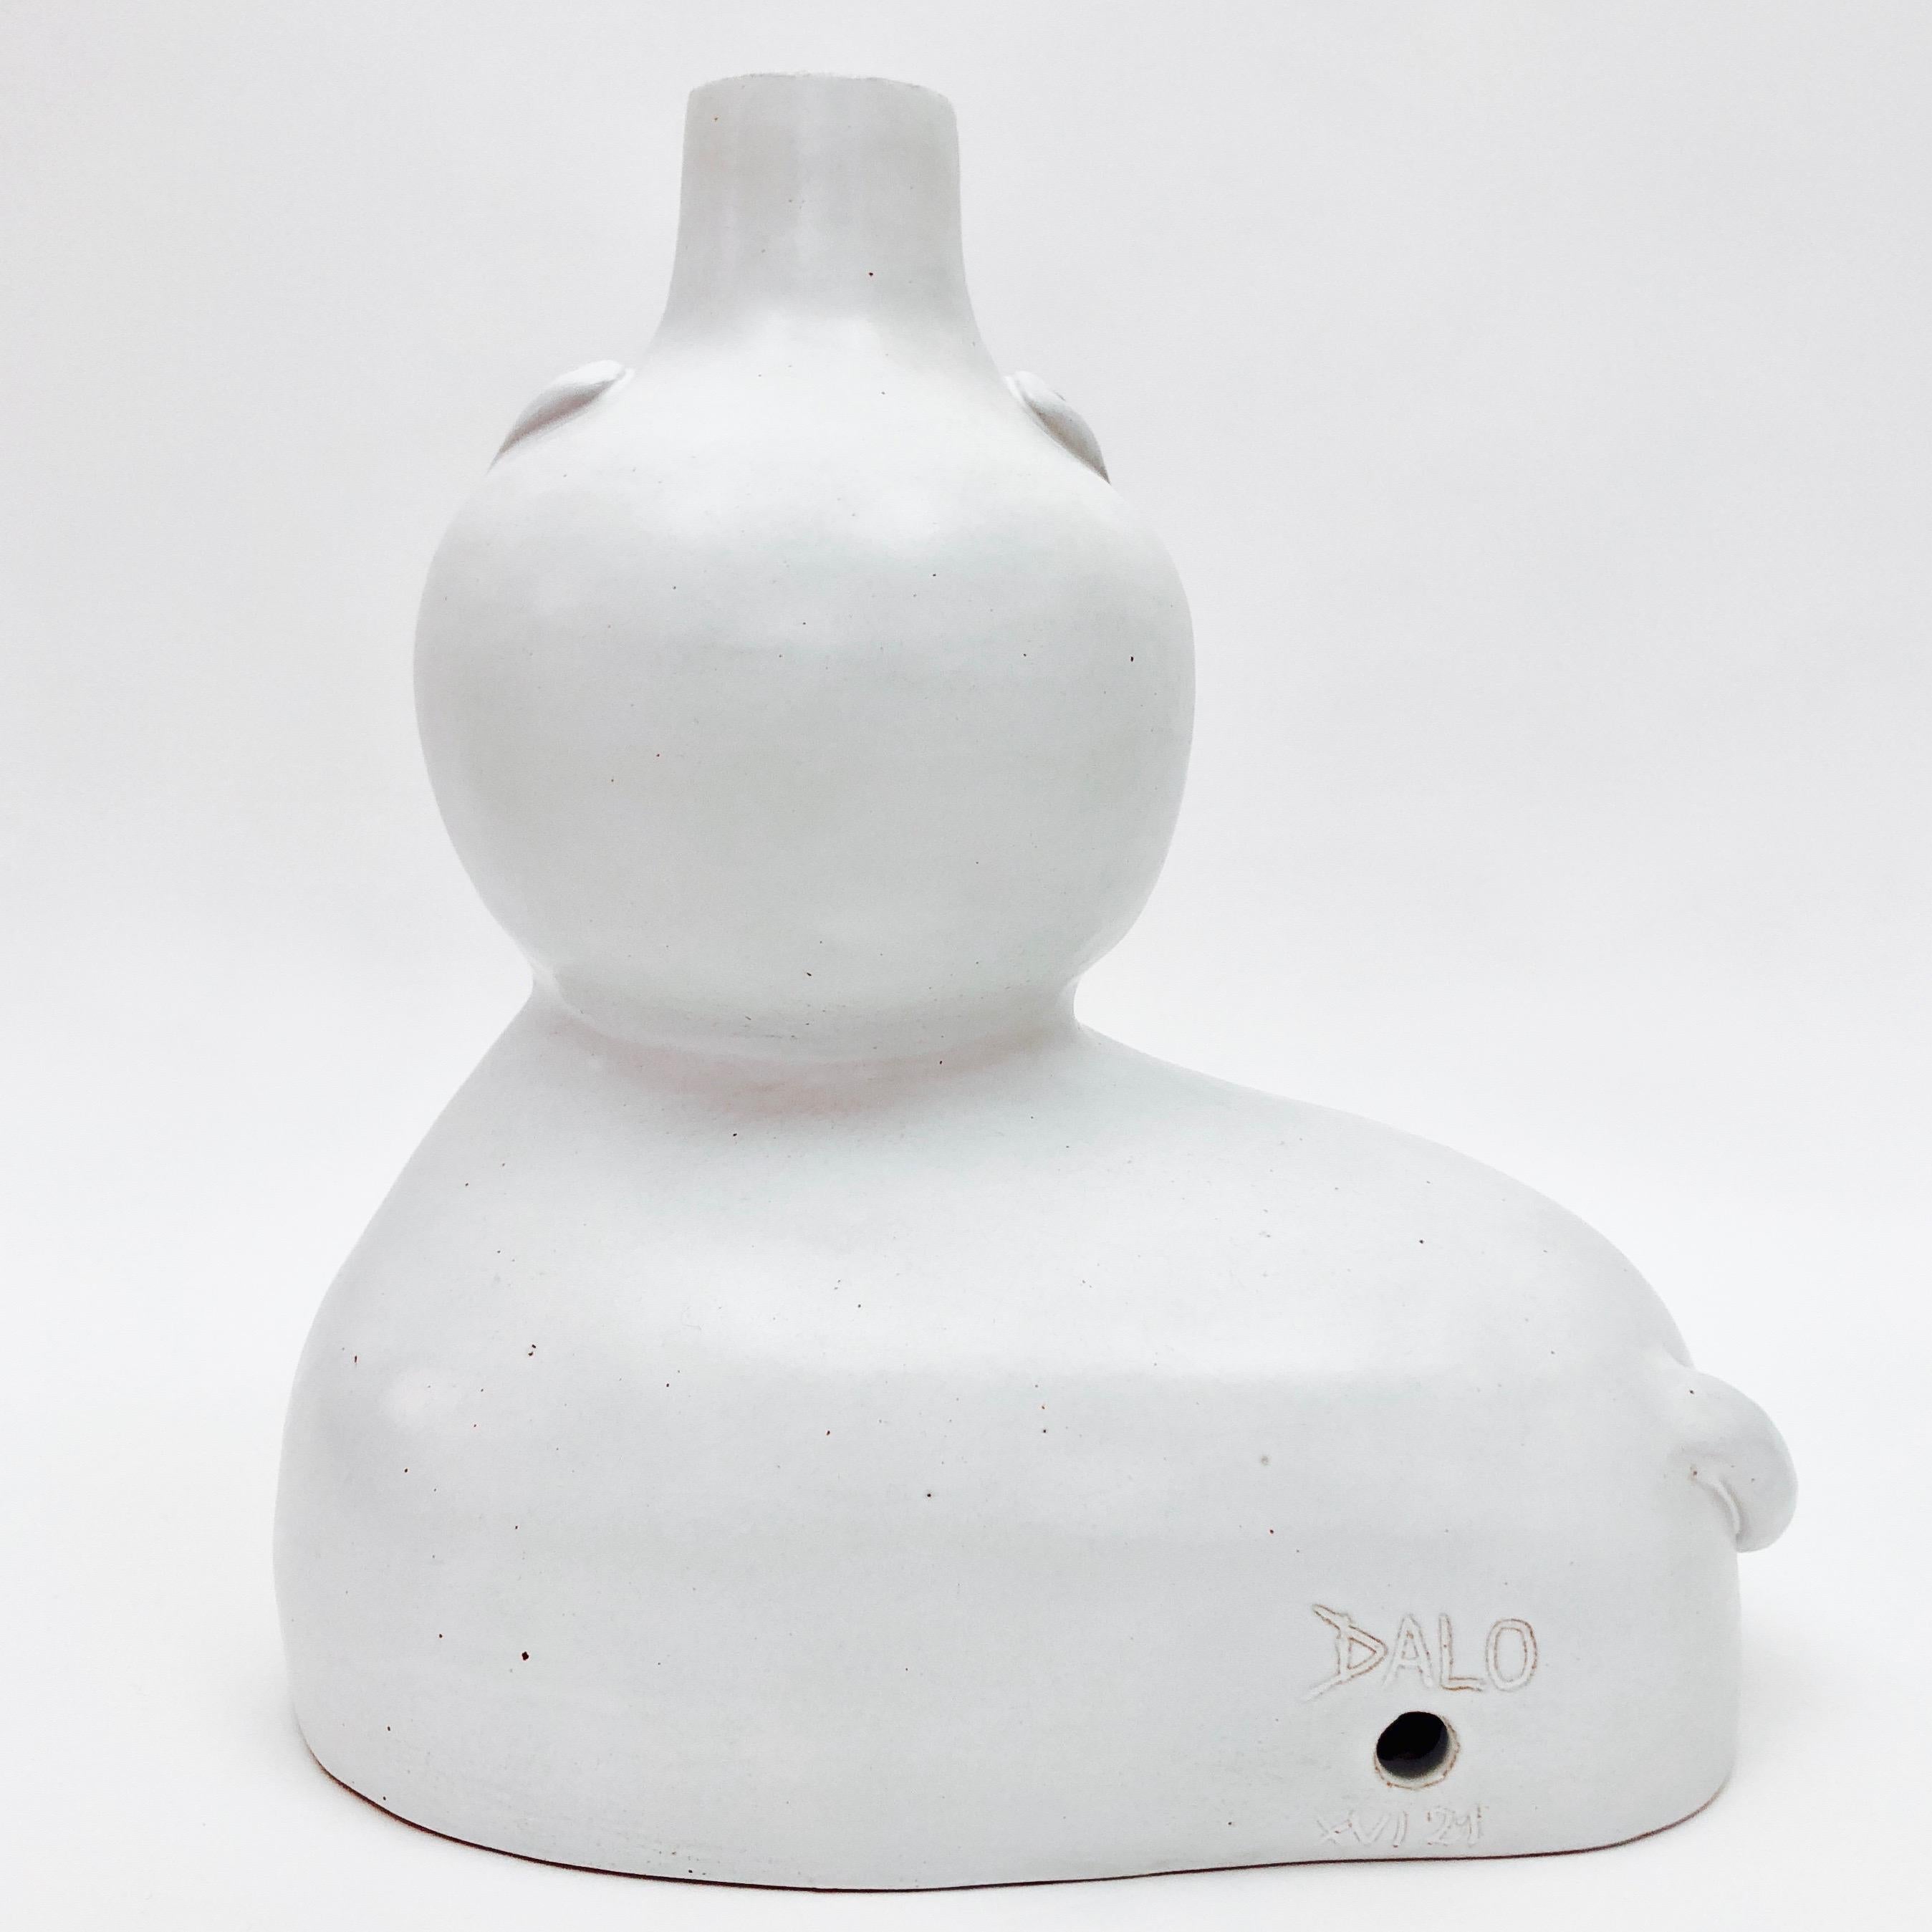 French Dalo, White Ceramic Lamp Base For Sale